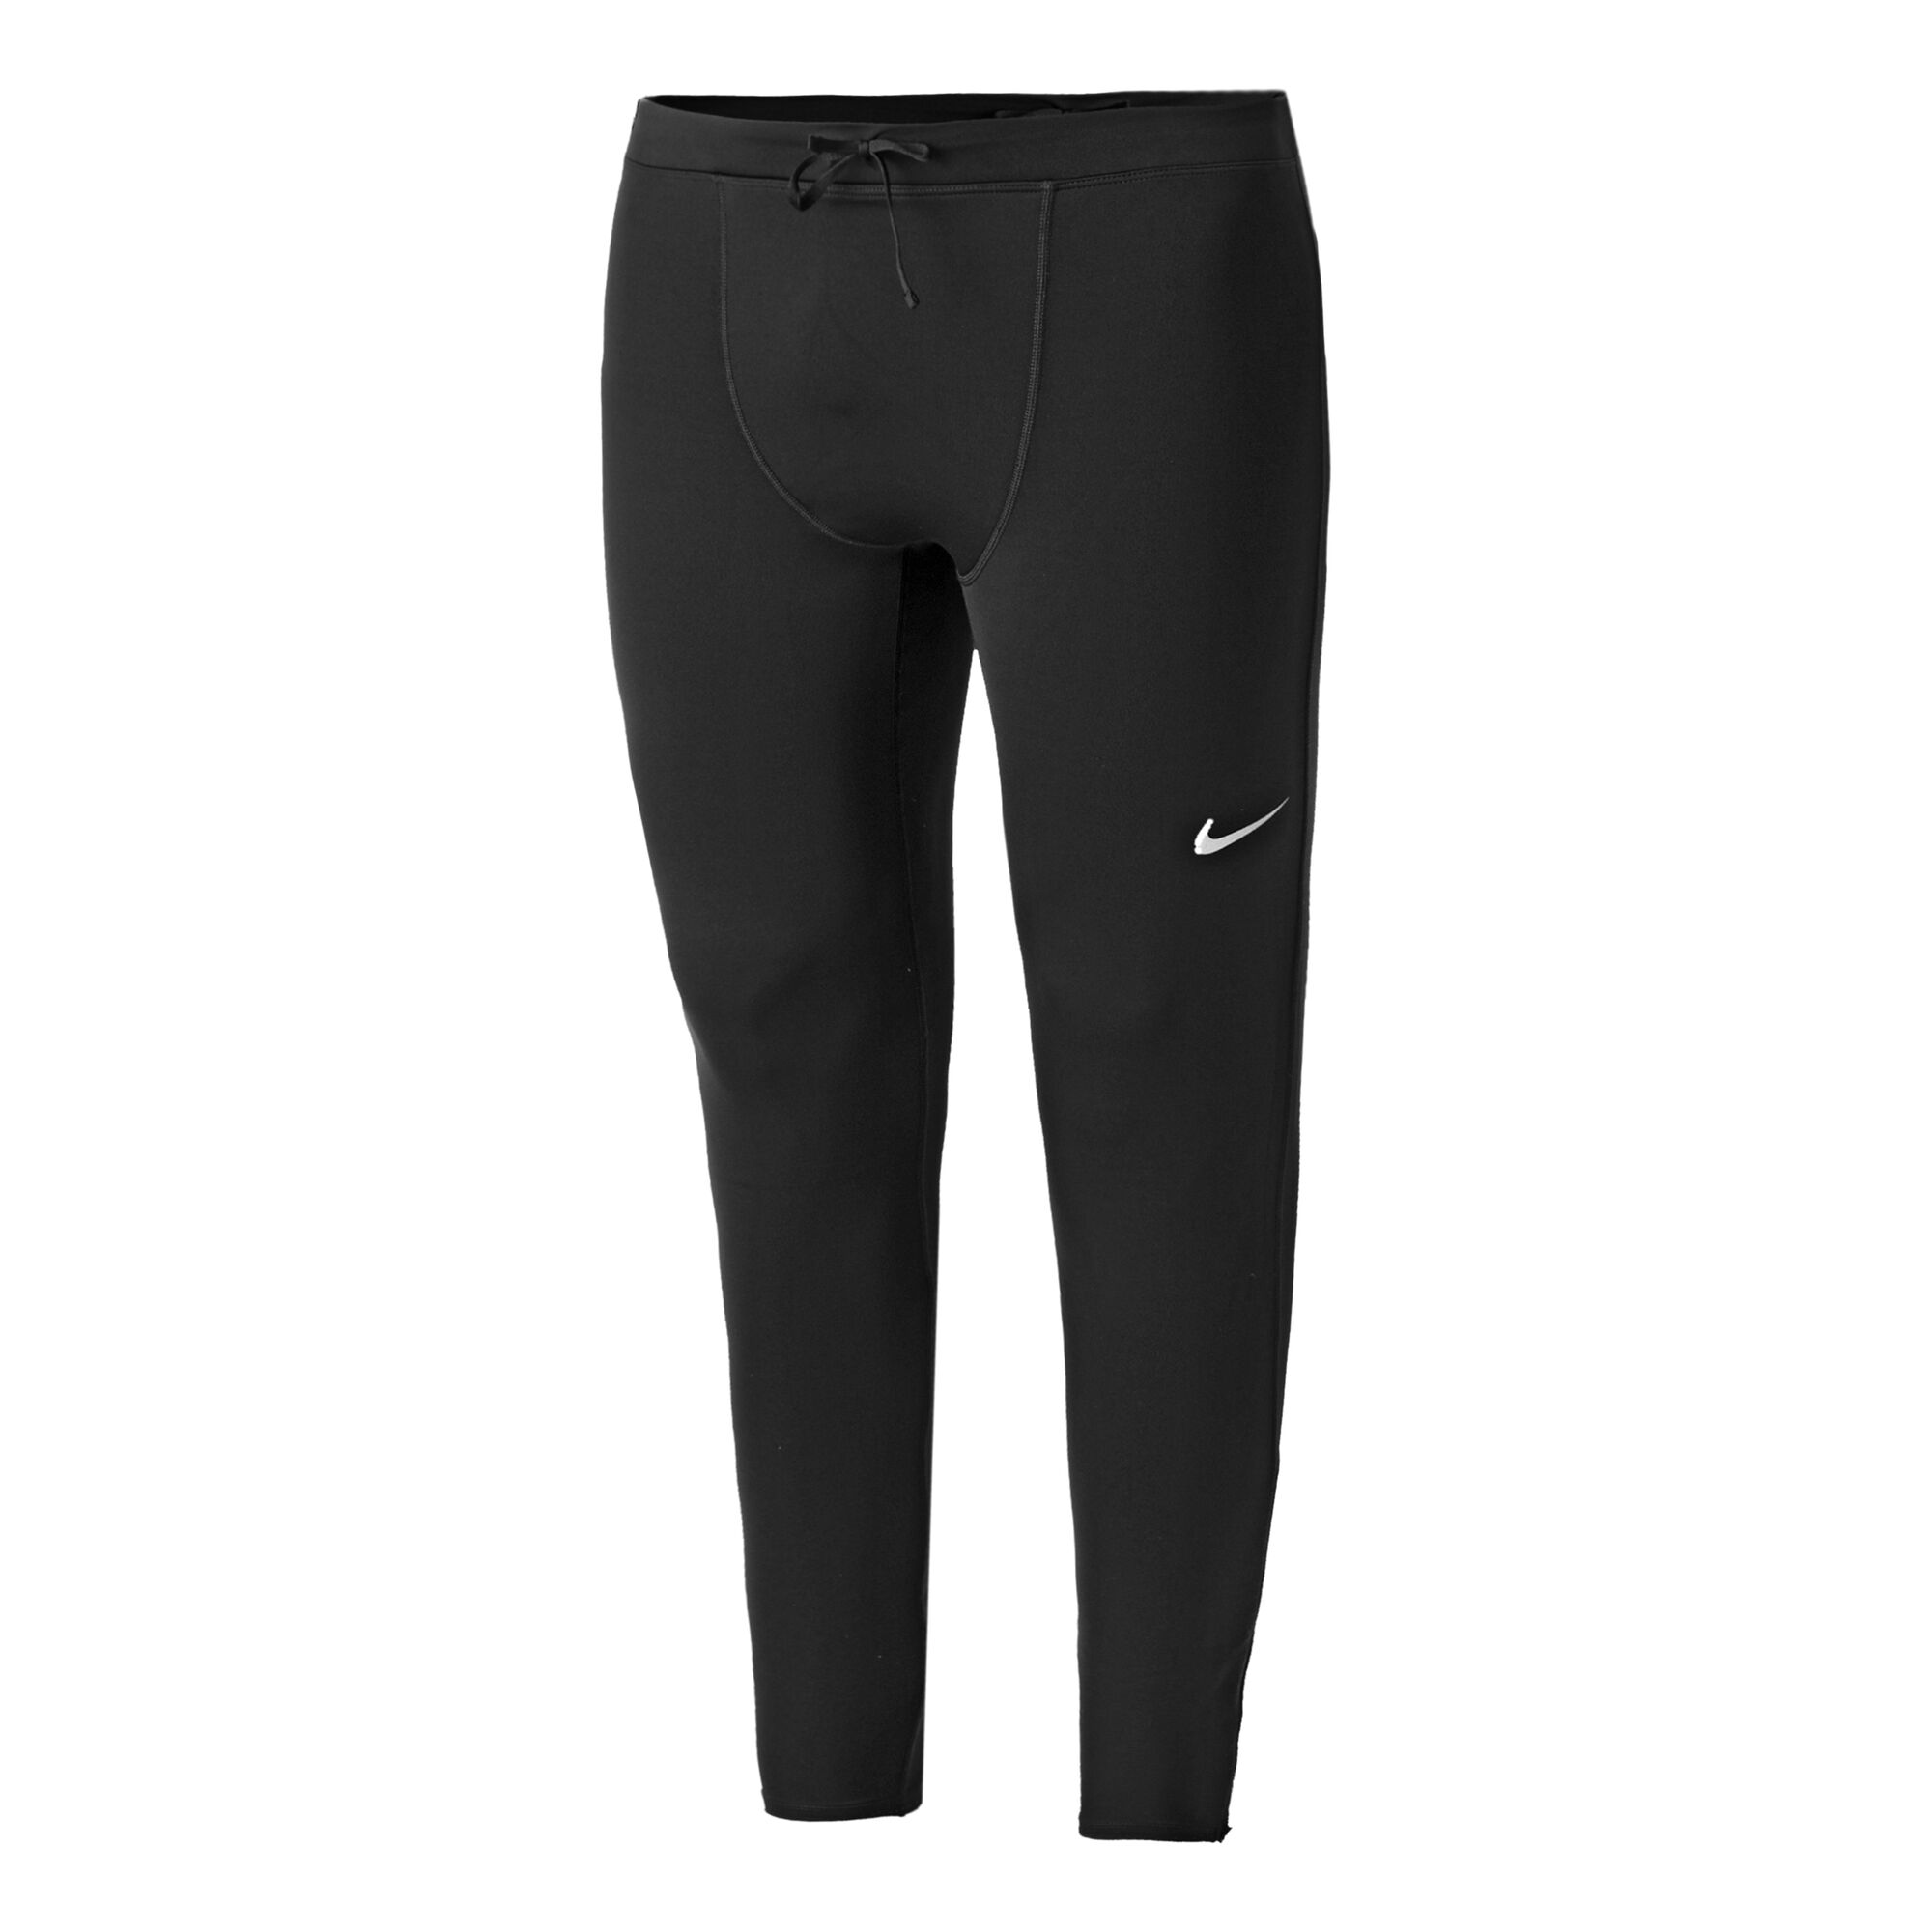 Buy Nike Dri-Fit Challenger Tight Men Black, Silver online